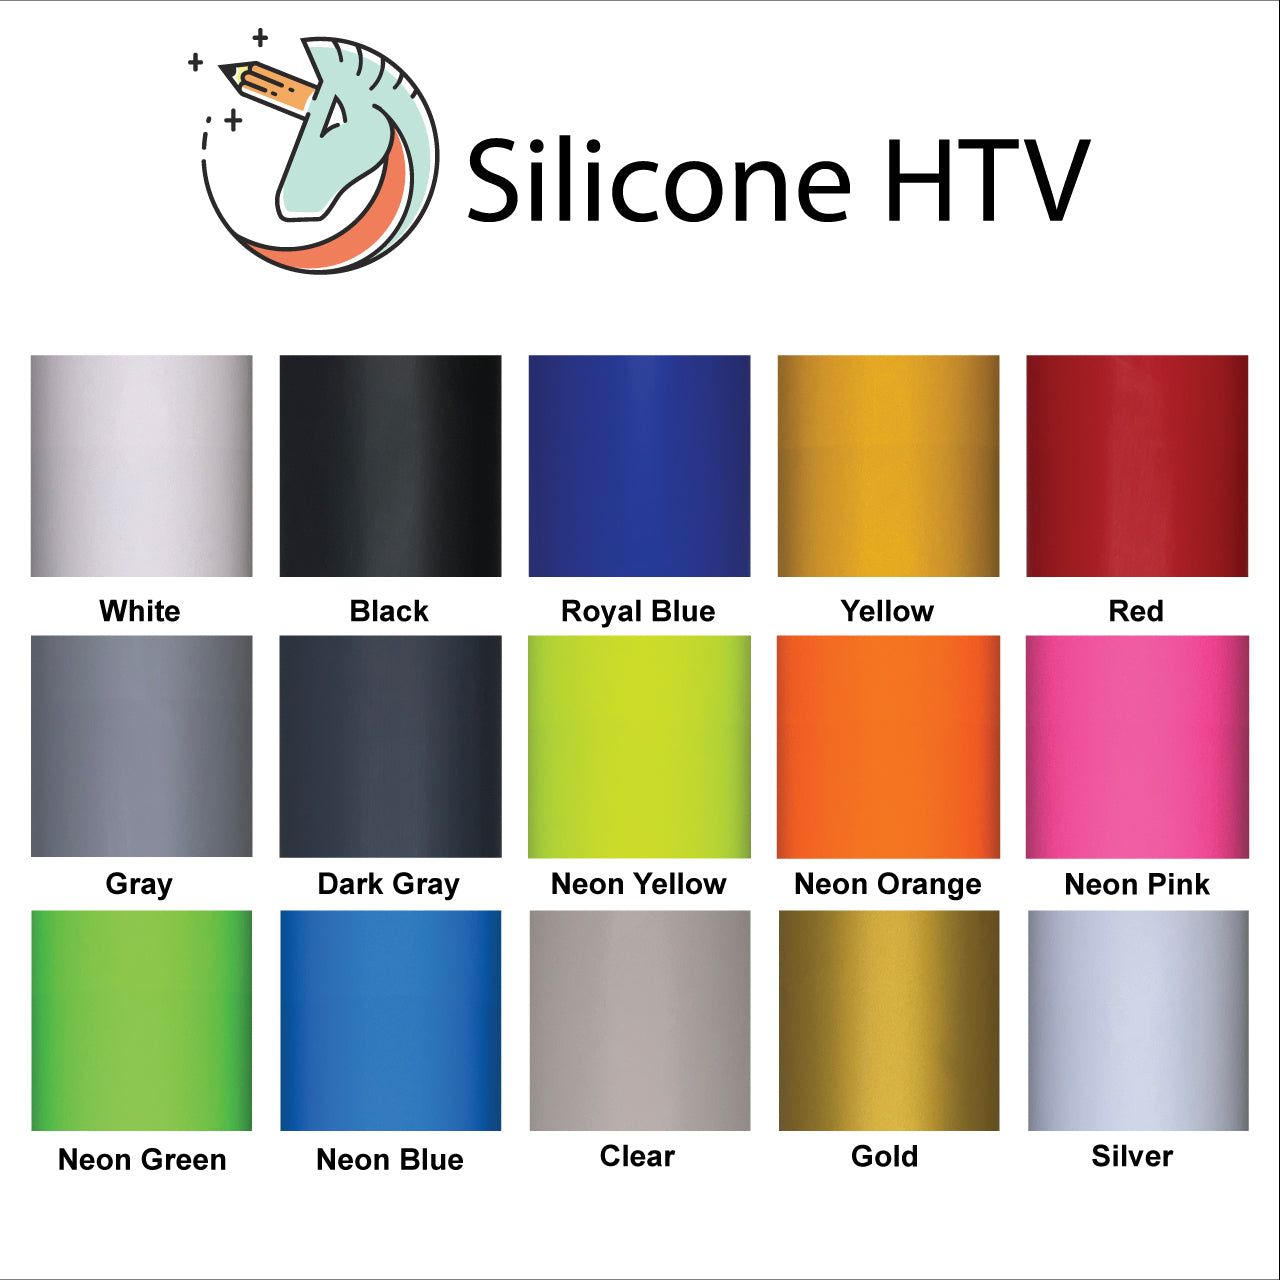 Silver Silicone Heat Transfer Vinyl Sheets By Craftables – shopcraftables